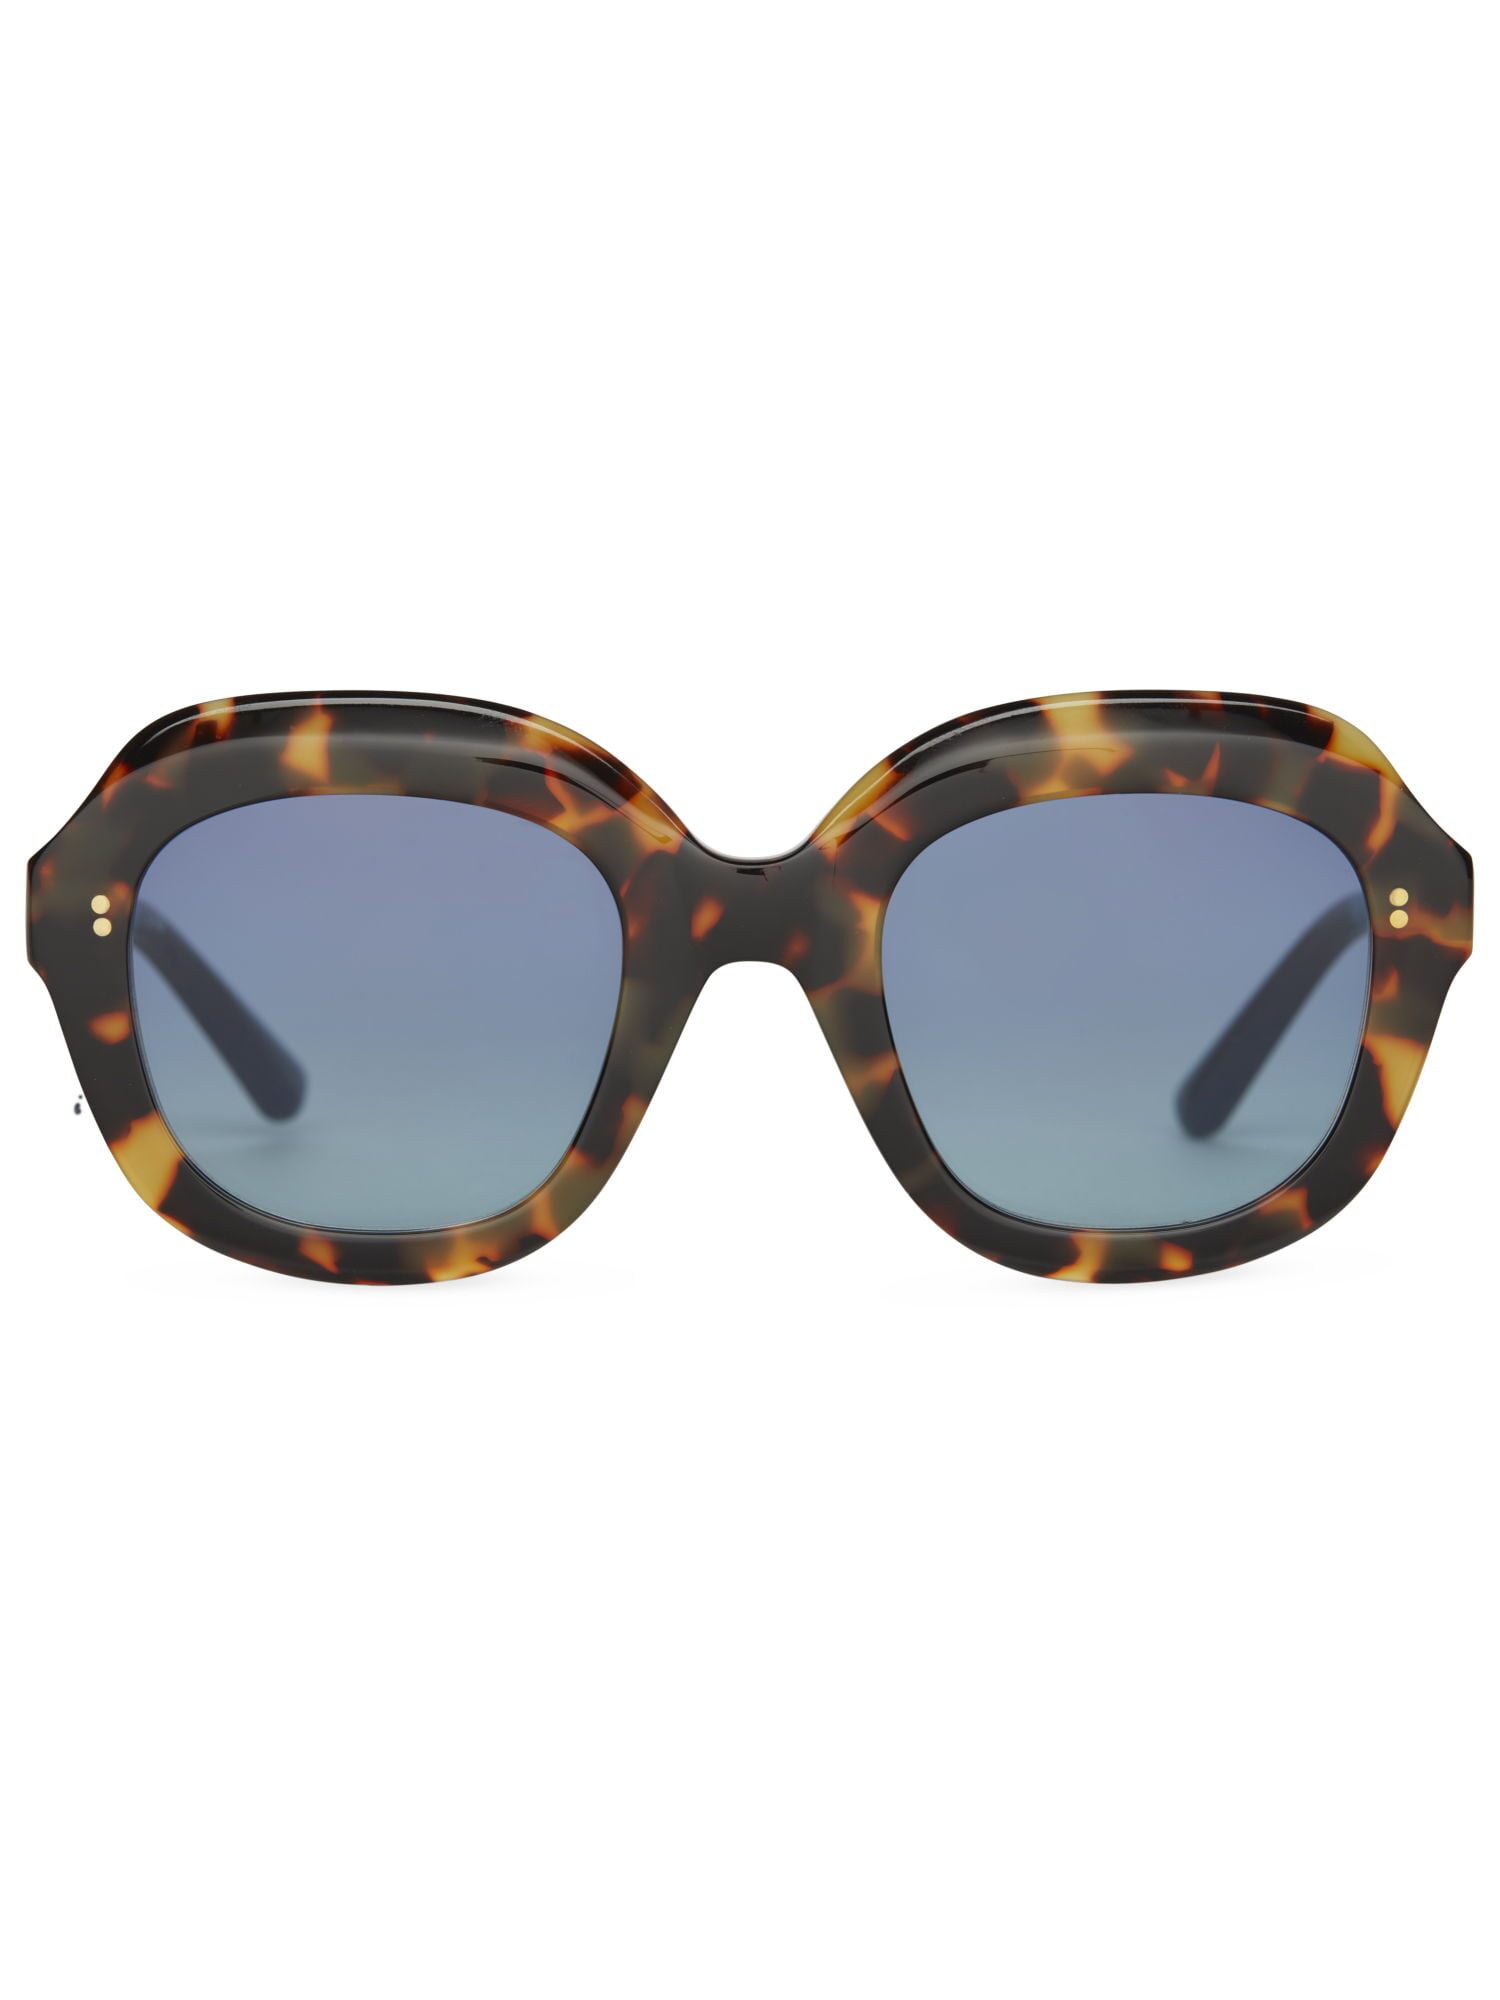 TOMS Sunglasses Mariska Blonde Tortoise | Blue Gradient Lens - Walmart.com